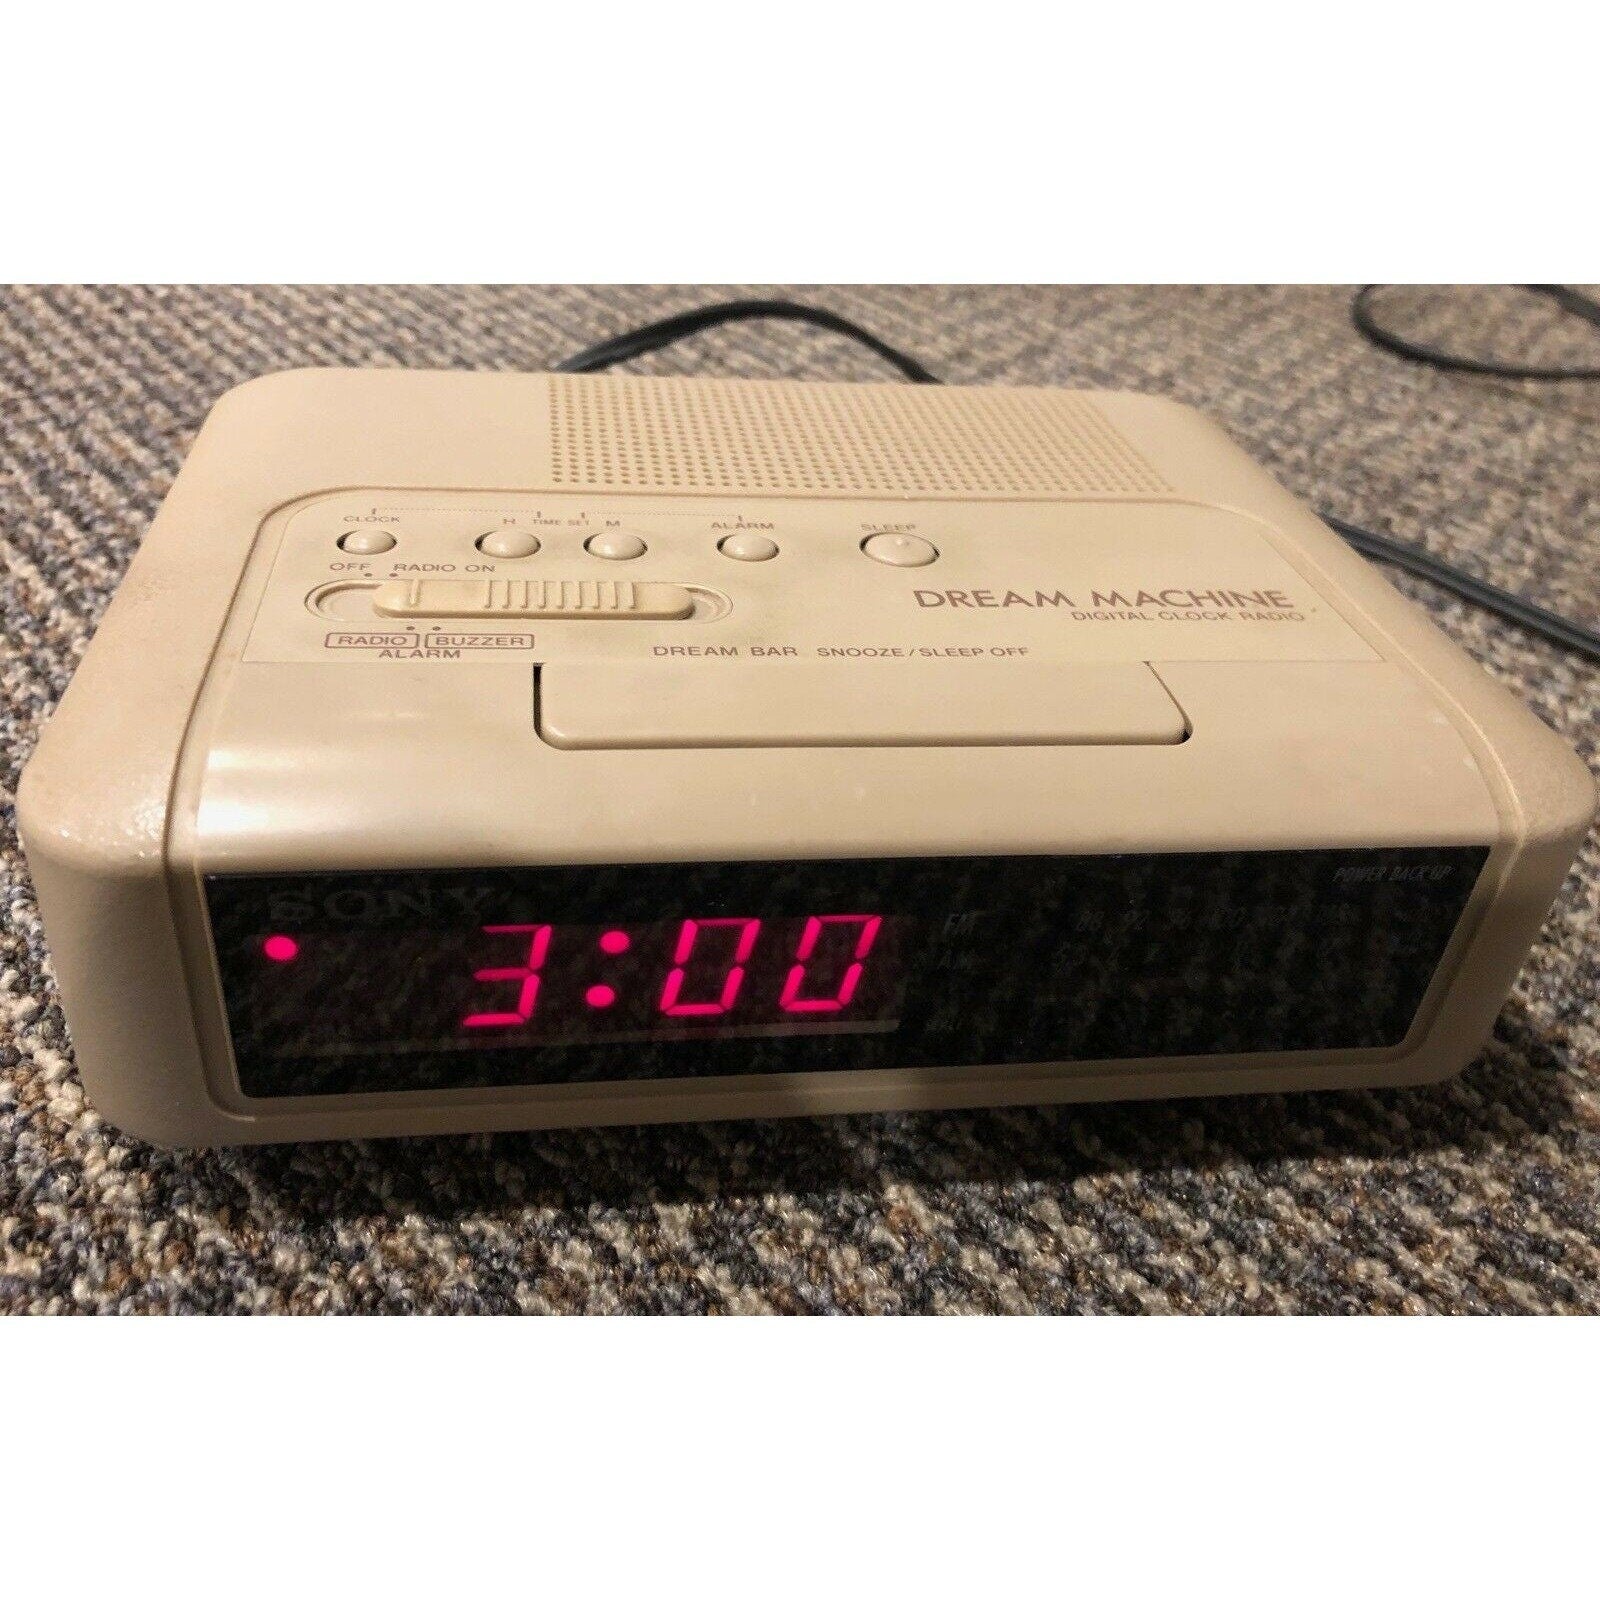 Sony Dream Machine AM FM Alarm Clock Radio Model ICF C240